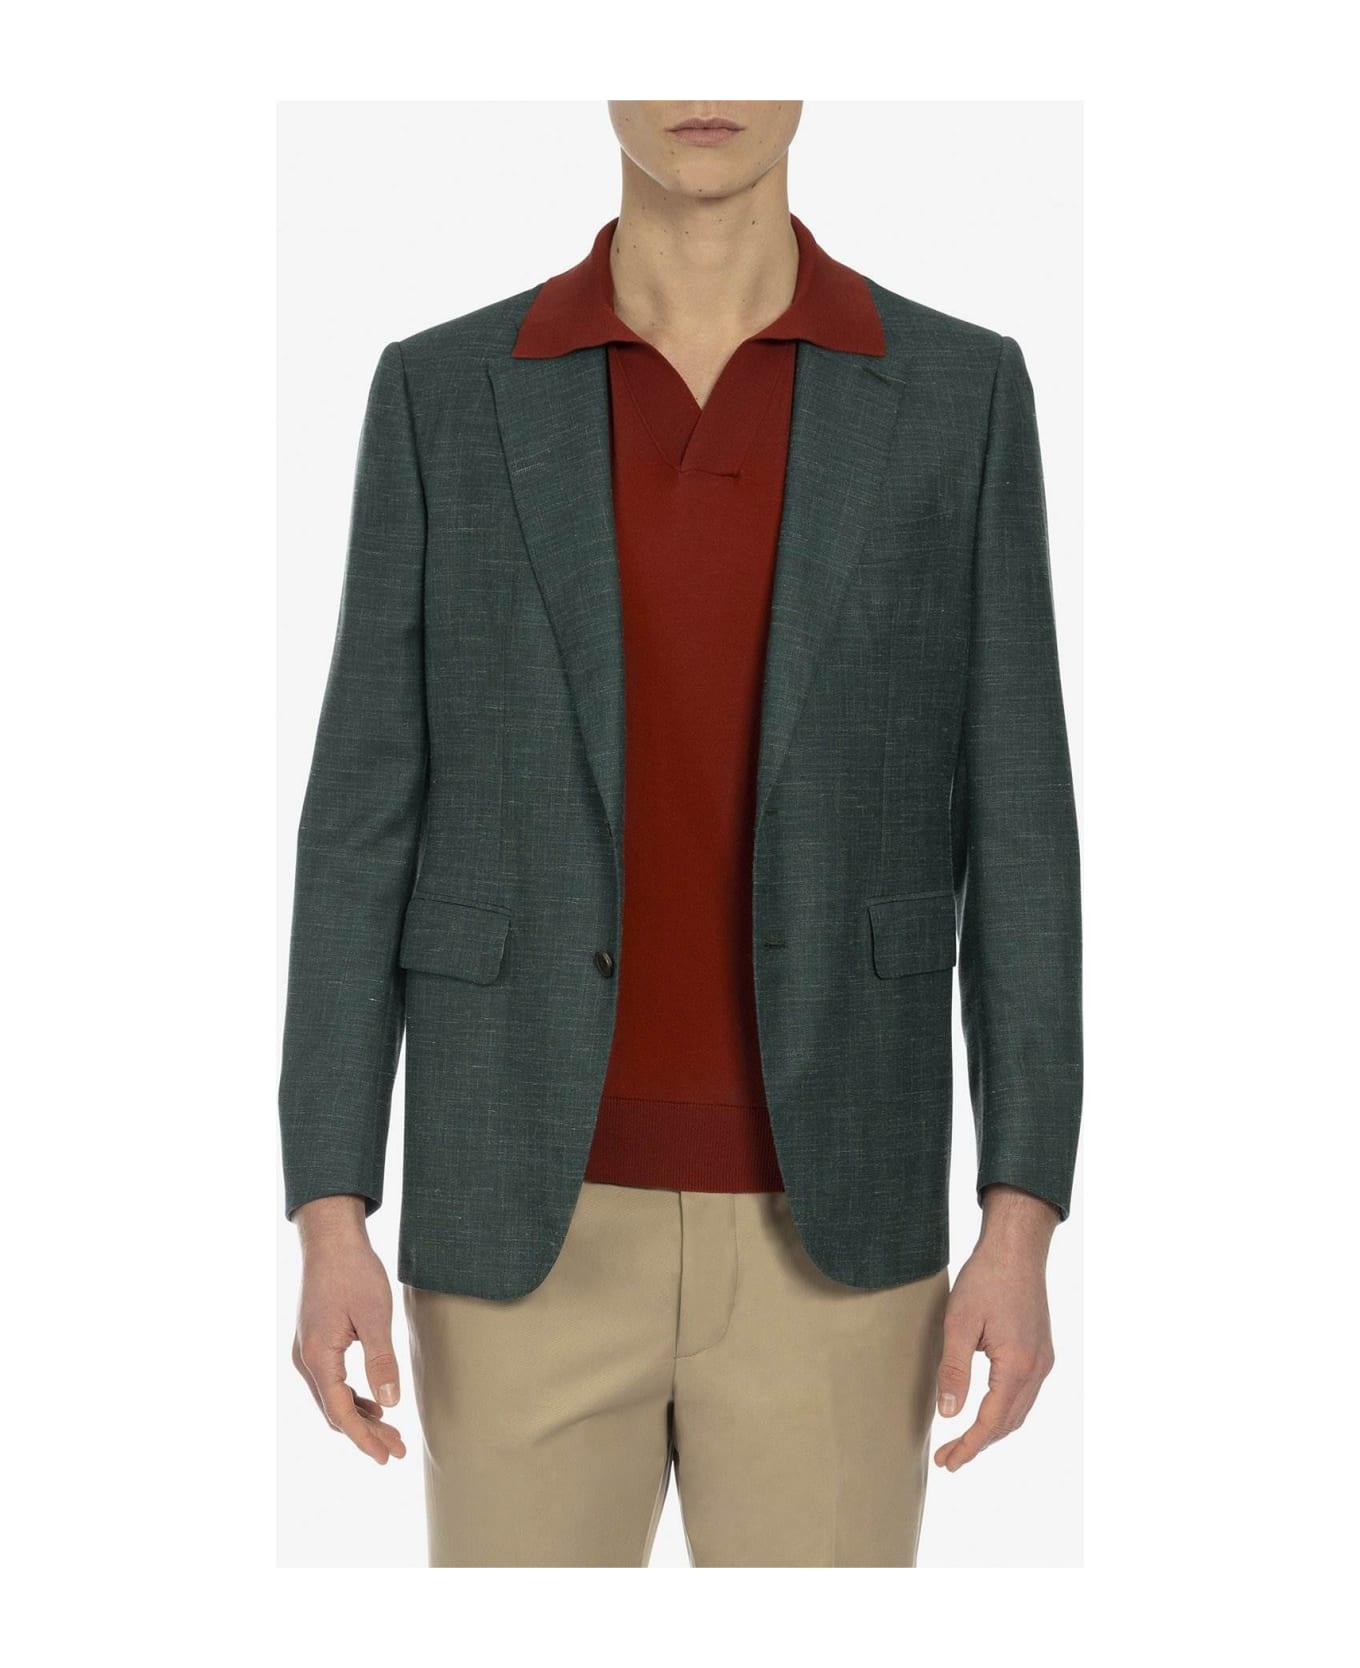 Larusmiani Godard Tailored Jacket Jacket - Teal